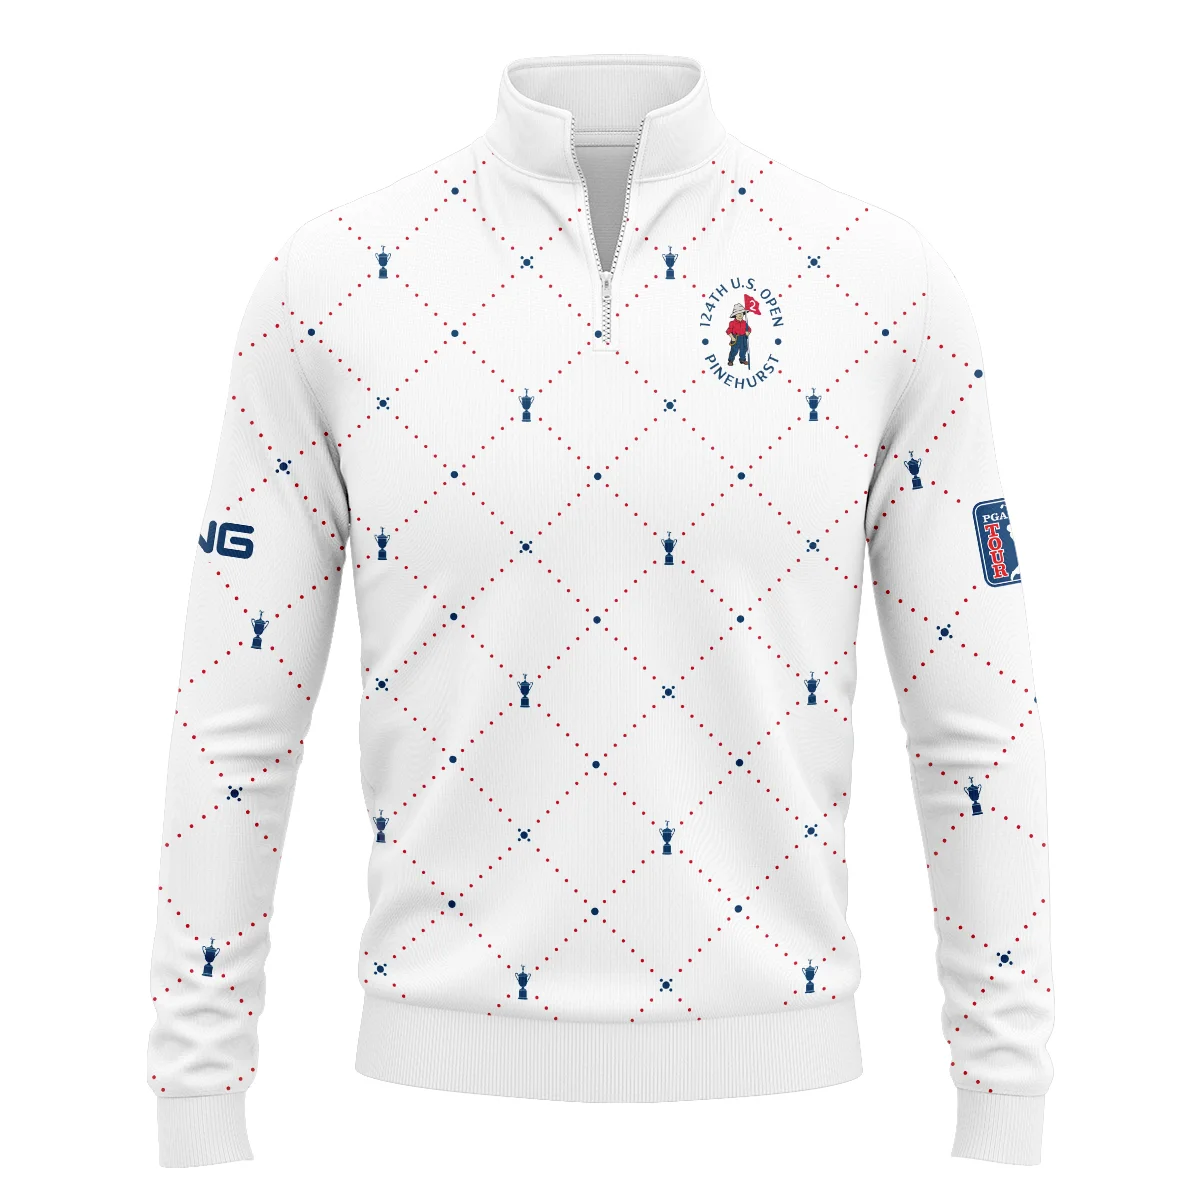 Argyle Pattern With Cup 124th U.S. Open Pinehurst Ping Unisex Sweatshirt Style Classic Sweatshirt